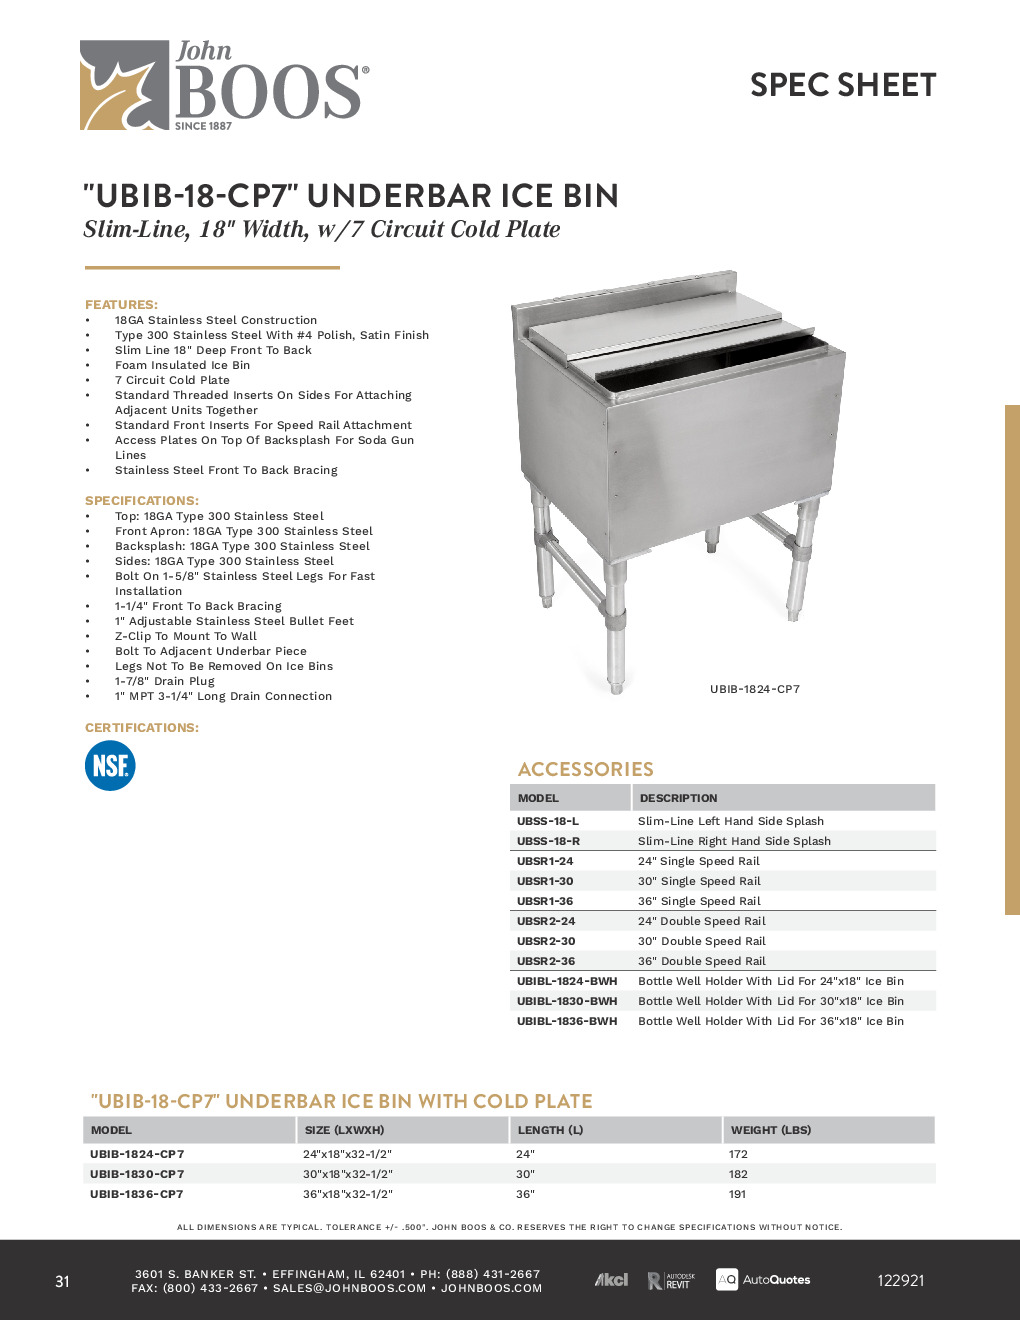 John Boos UBIB-1830-CP7-X Insulated Underbar Ice Bin w/ Cold Plate and Sliding Lid